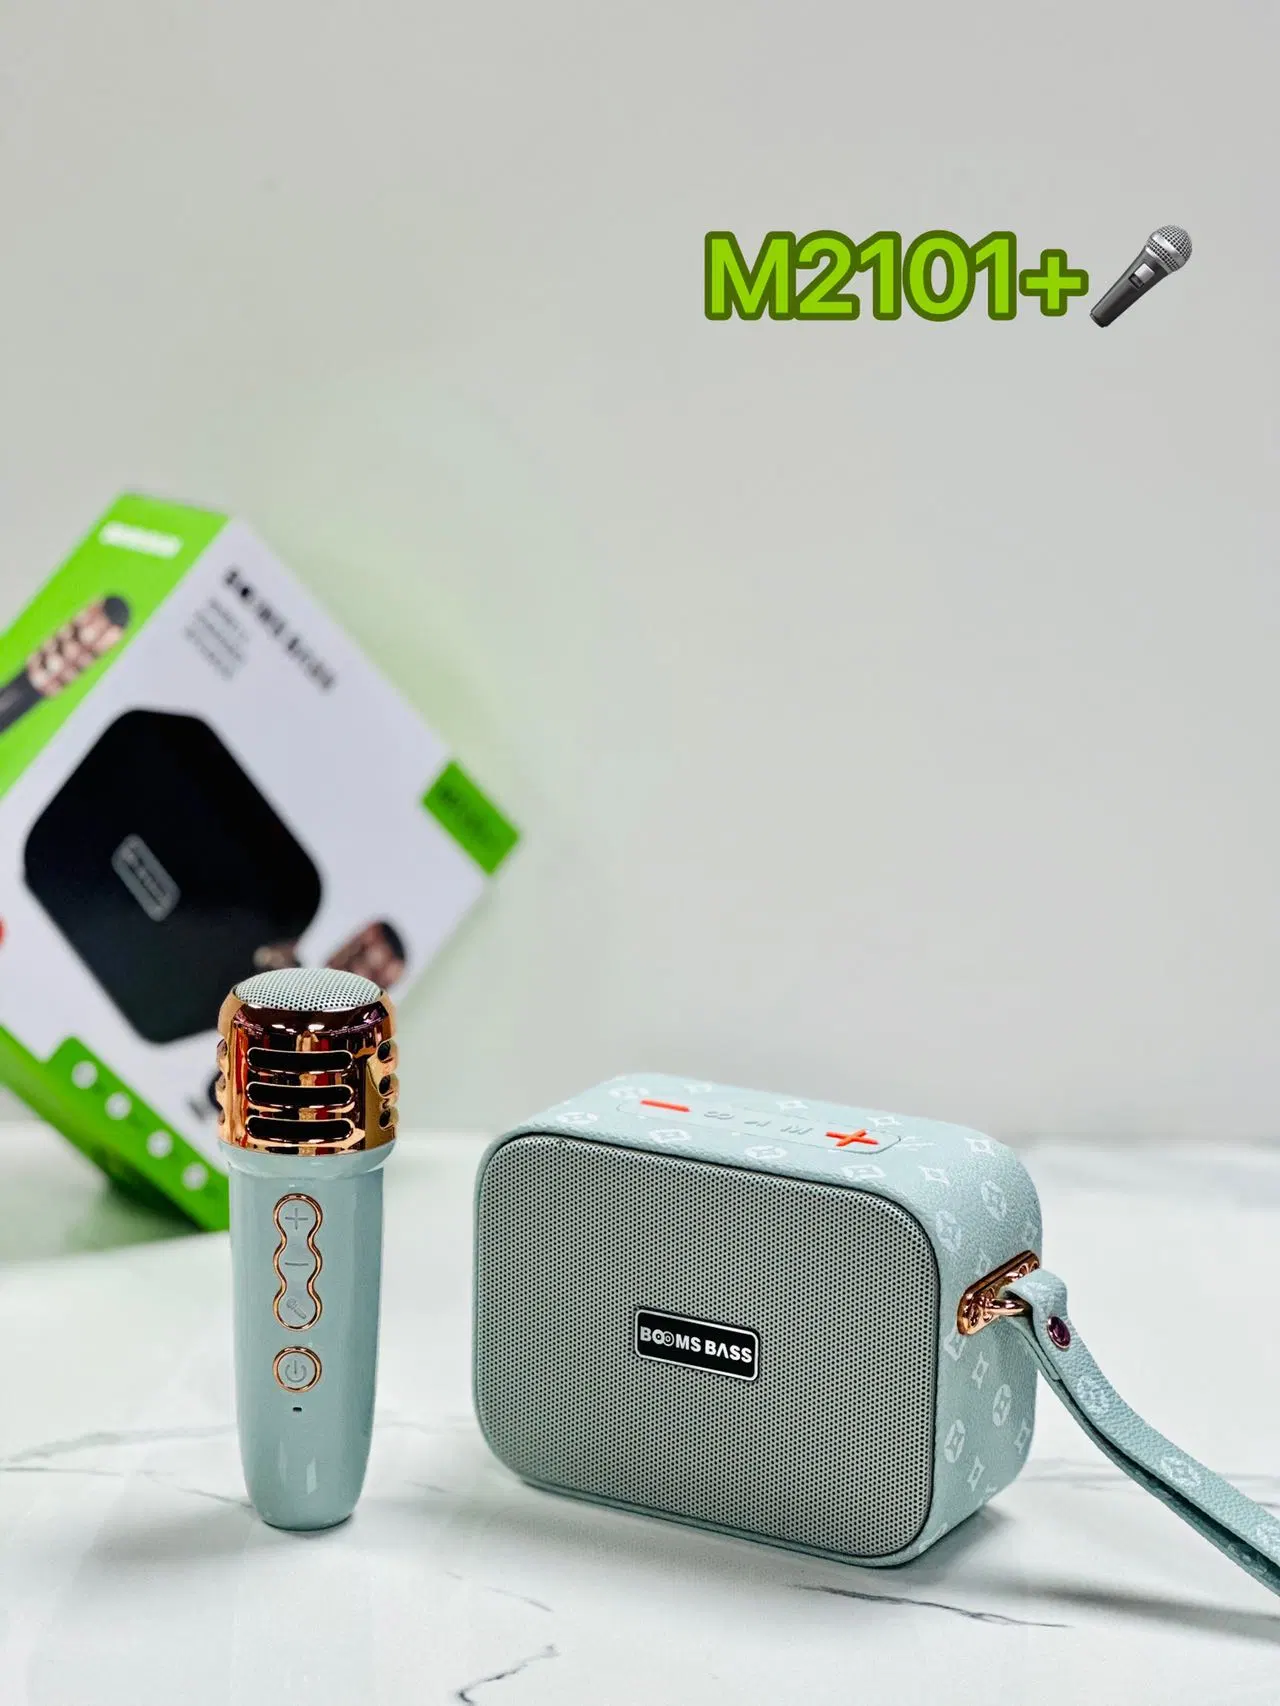 New Ld-M2101+Wireless KTV Audio Portable Strap Bluetooth Speaker Microphone Set Home KTV Karaoke_Black